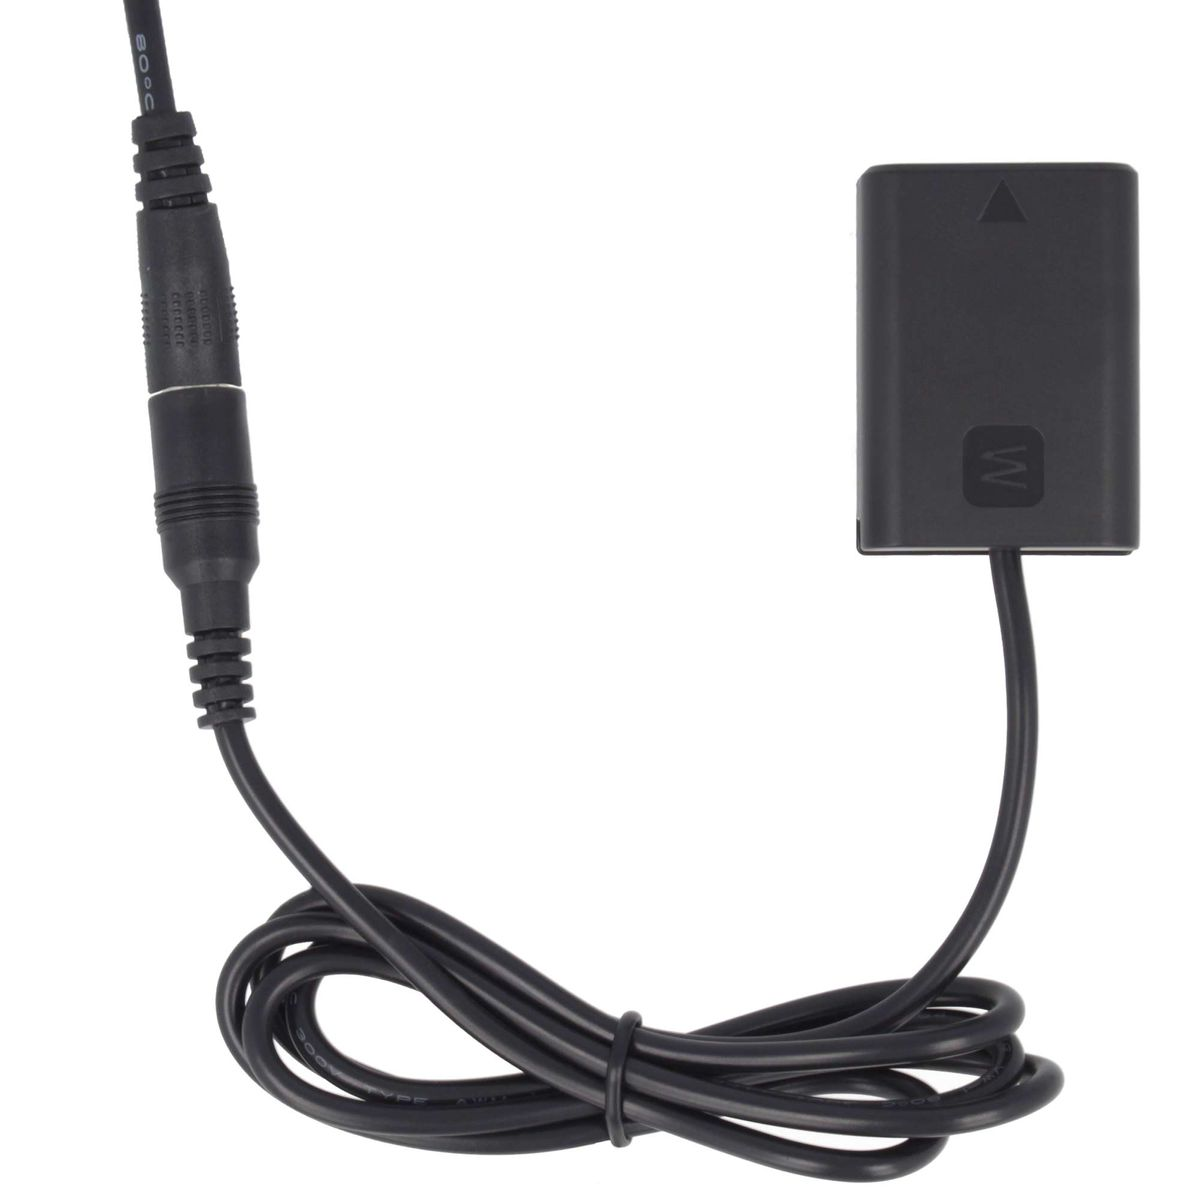 AKKU-KING USB-C Adapter + Kuppler Sony, Angabe keine mit kompatibel Sony AC-PW20 Ladegerät